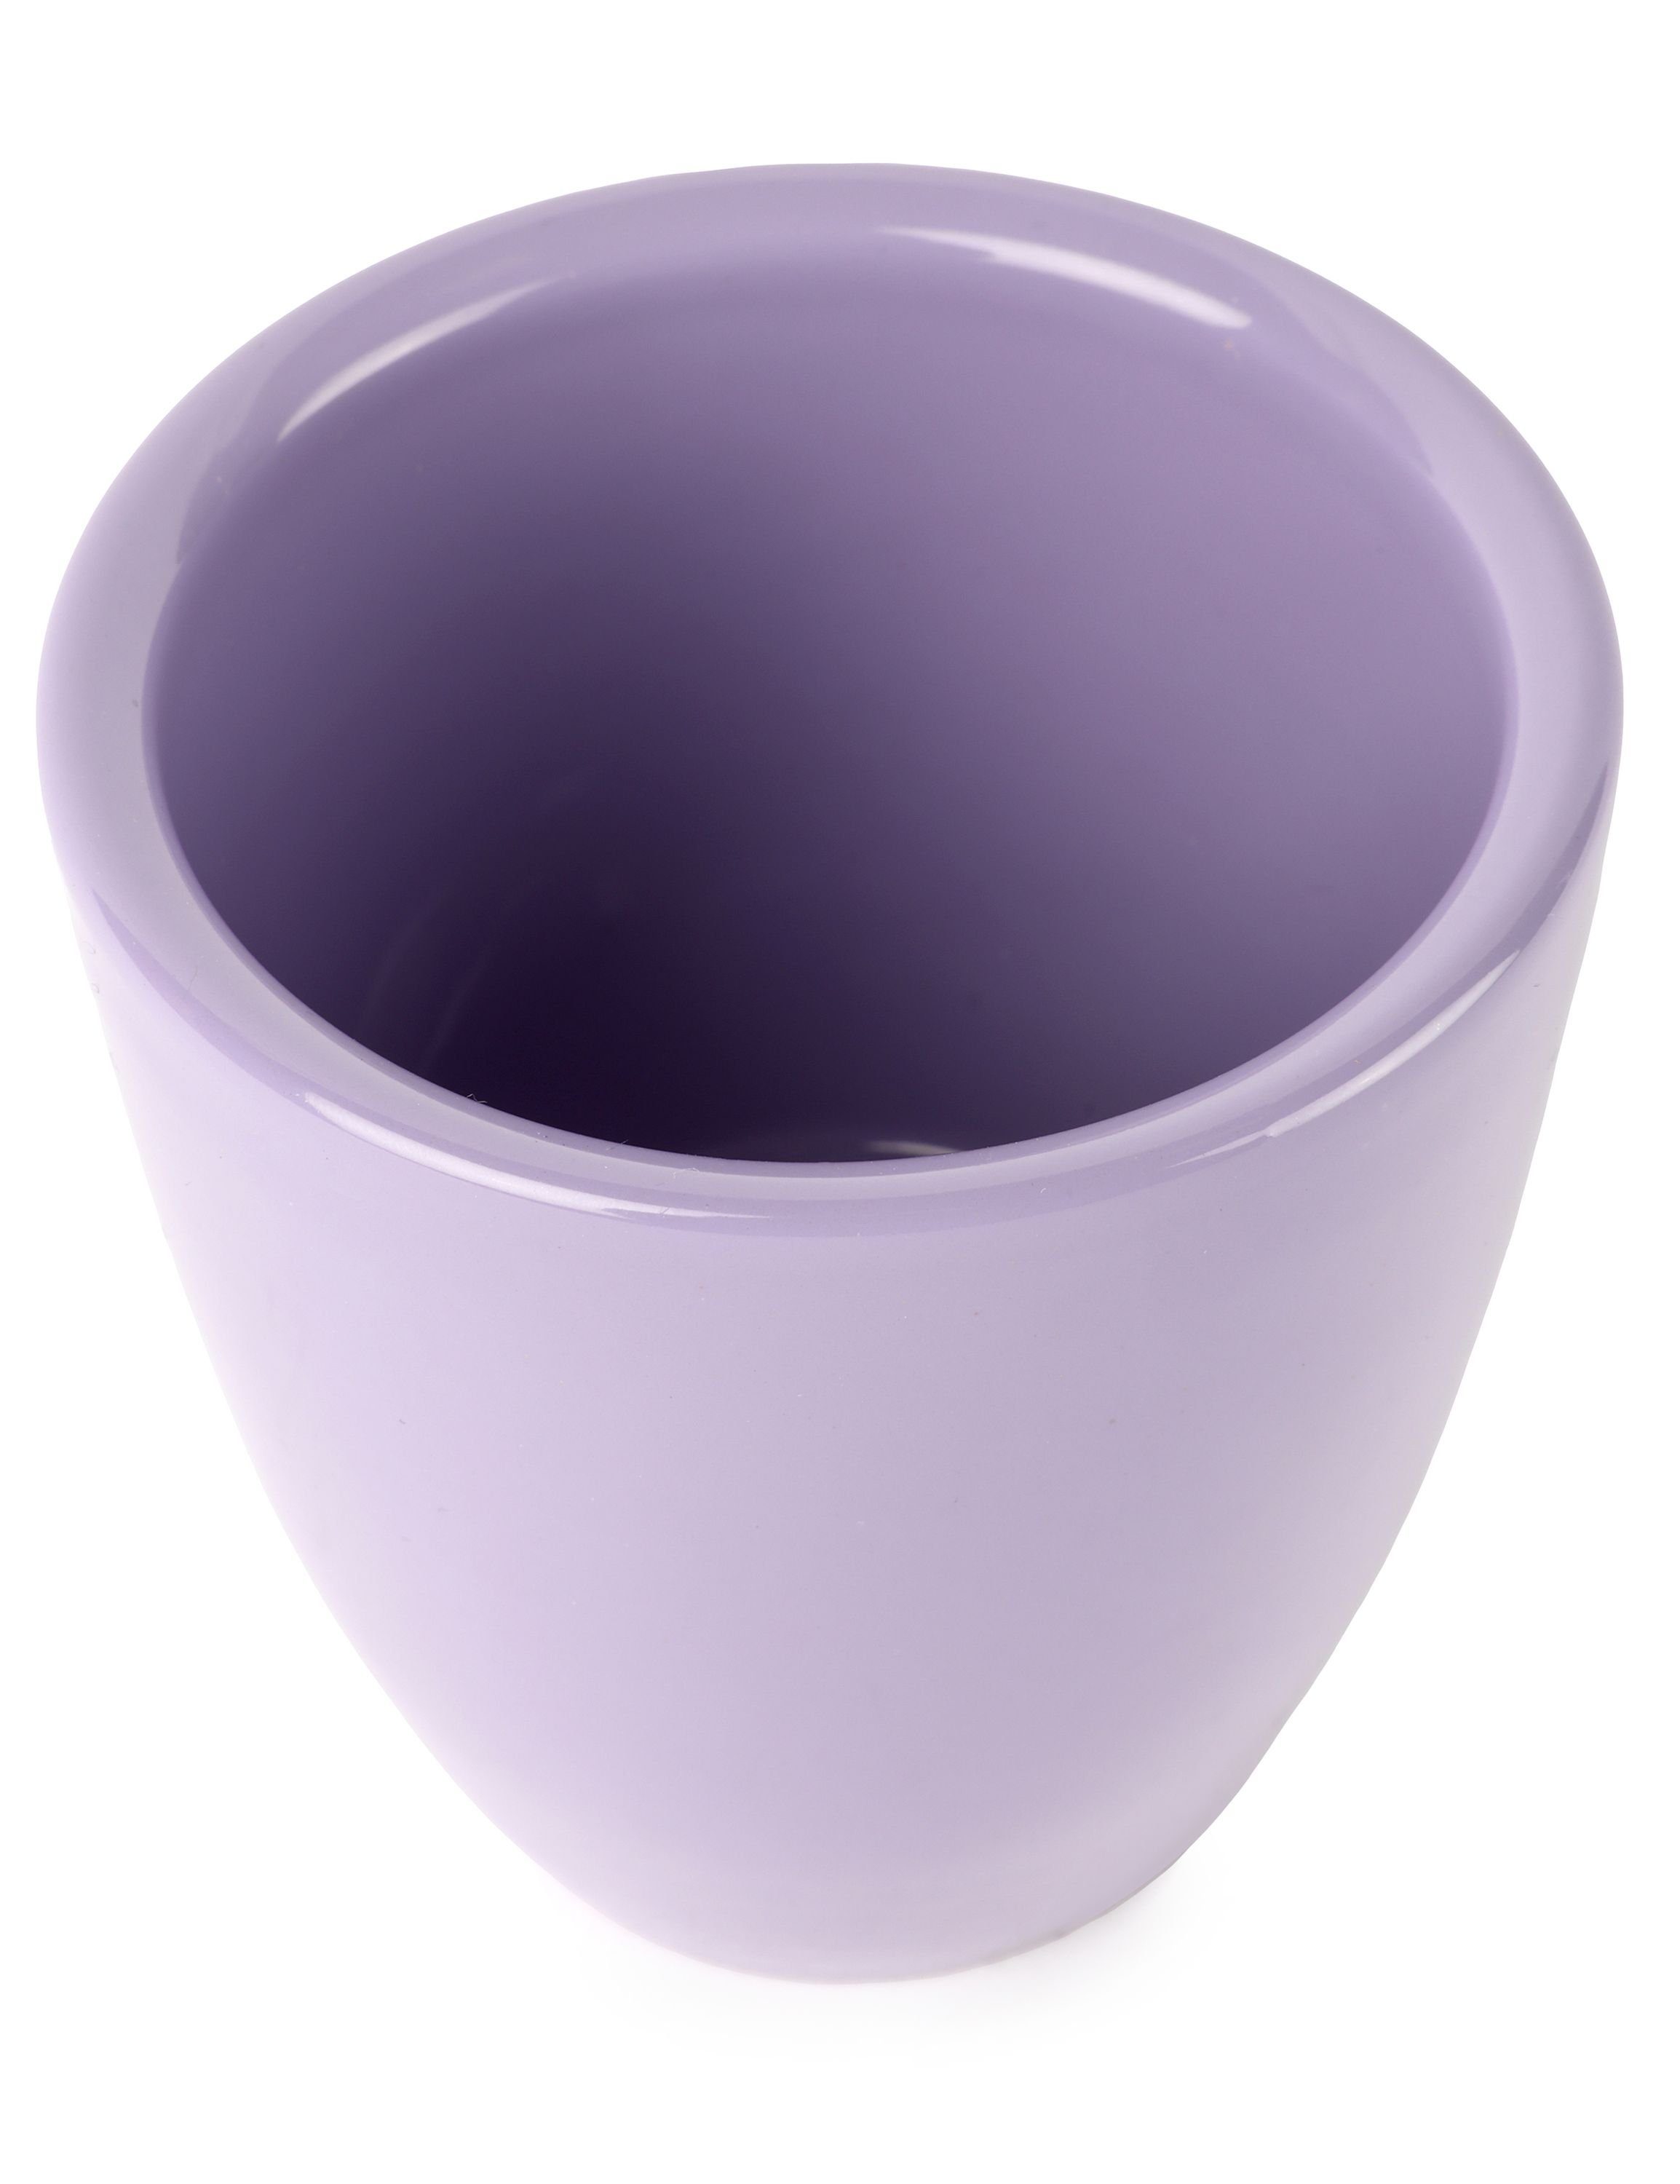 Garronda Keramik Blumentopf Pflanztopf Lavender045 GD-0017 Blumentopf